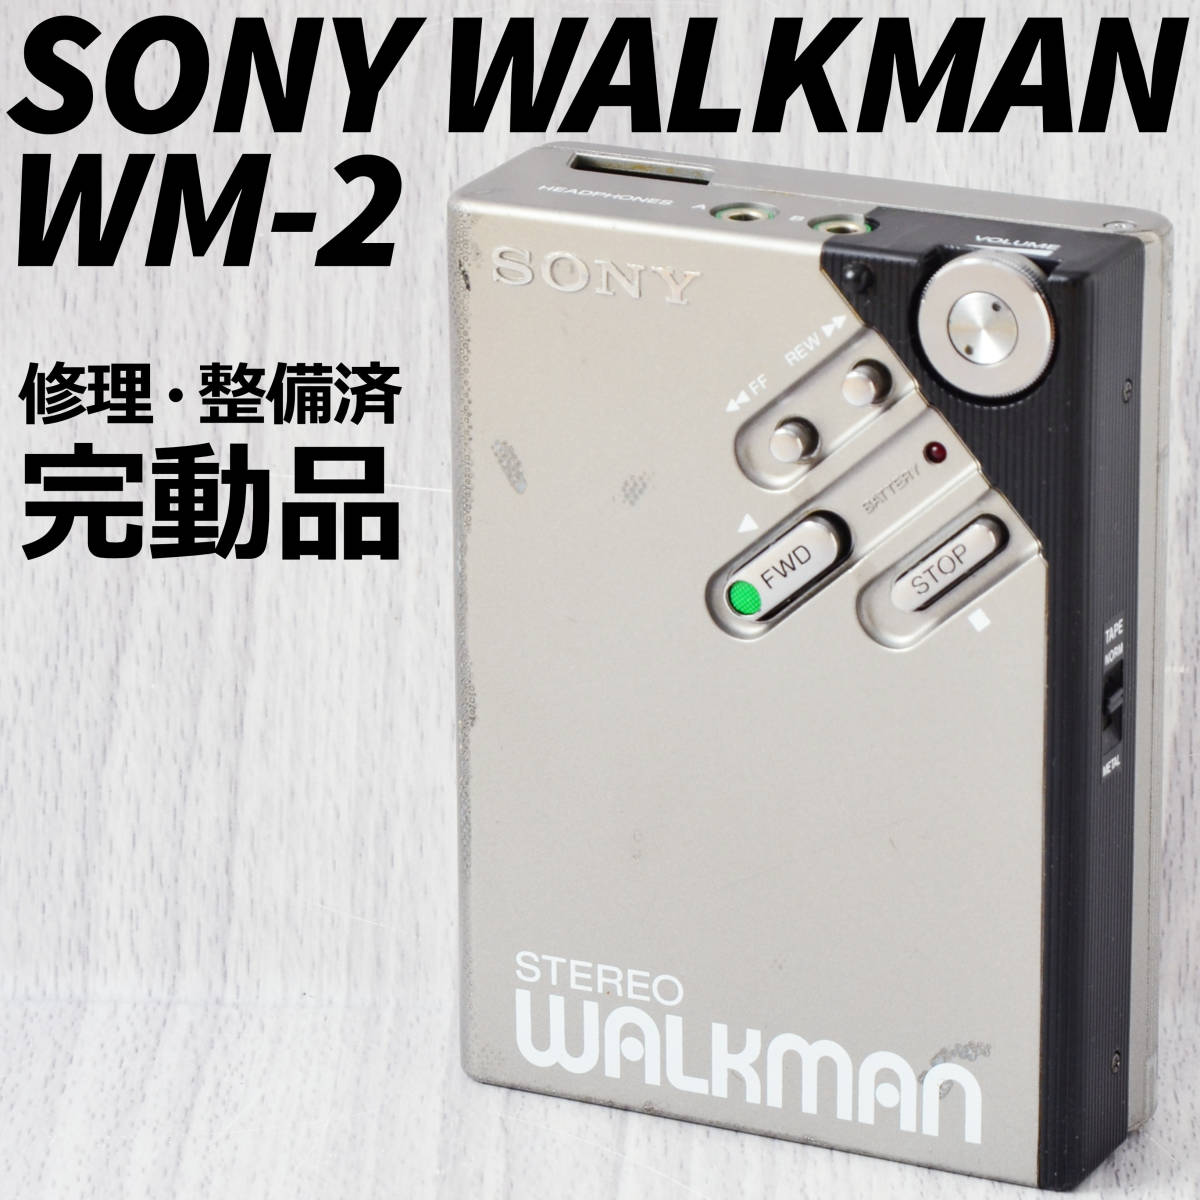 SONY WALKMAN WM-2 カセットウォークマン 修理・整備済 完動品